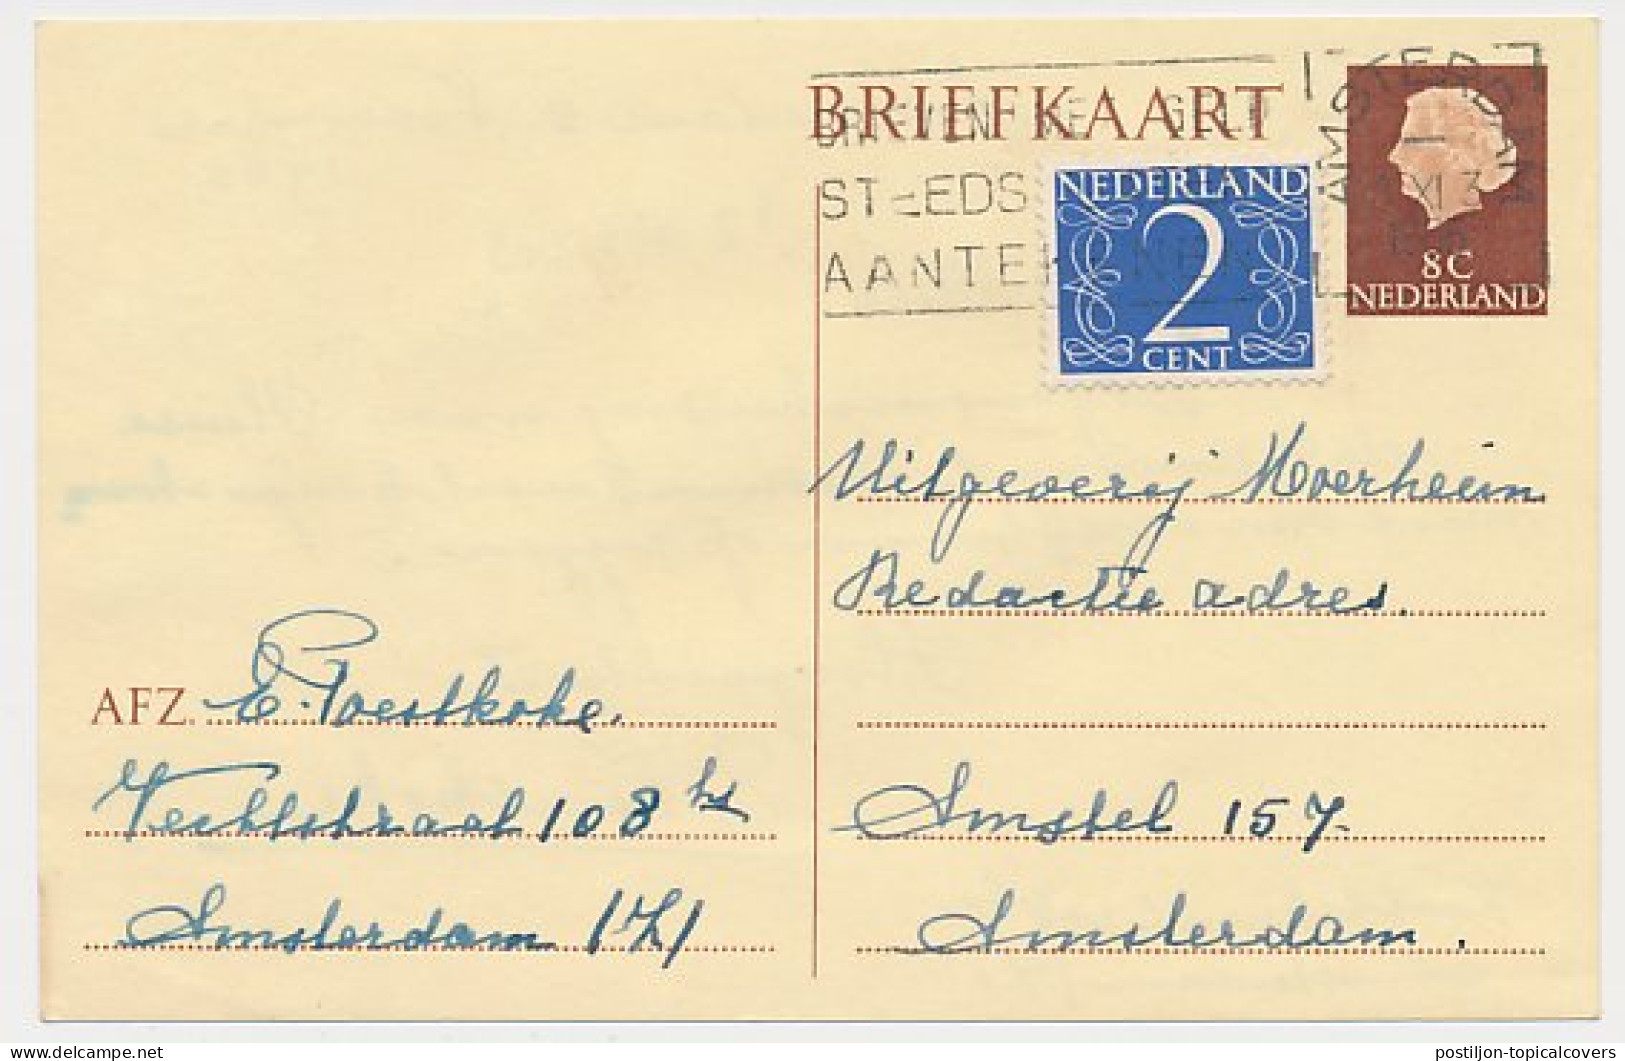 Briefkaart G. 325 / Bijfrankering Locaal Te Amsterdam 1965 - Postal Stationery